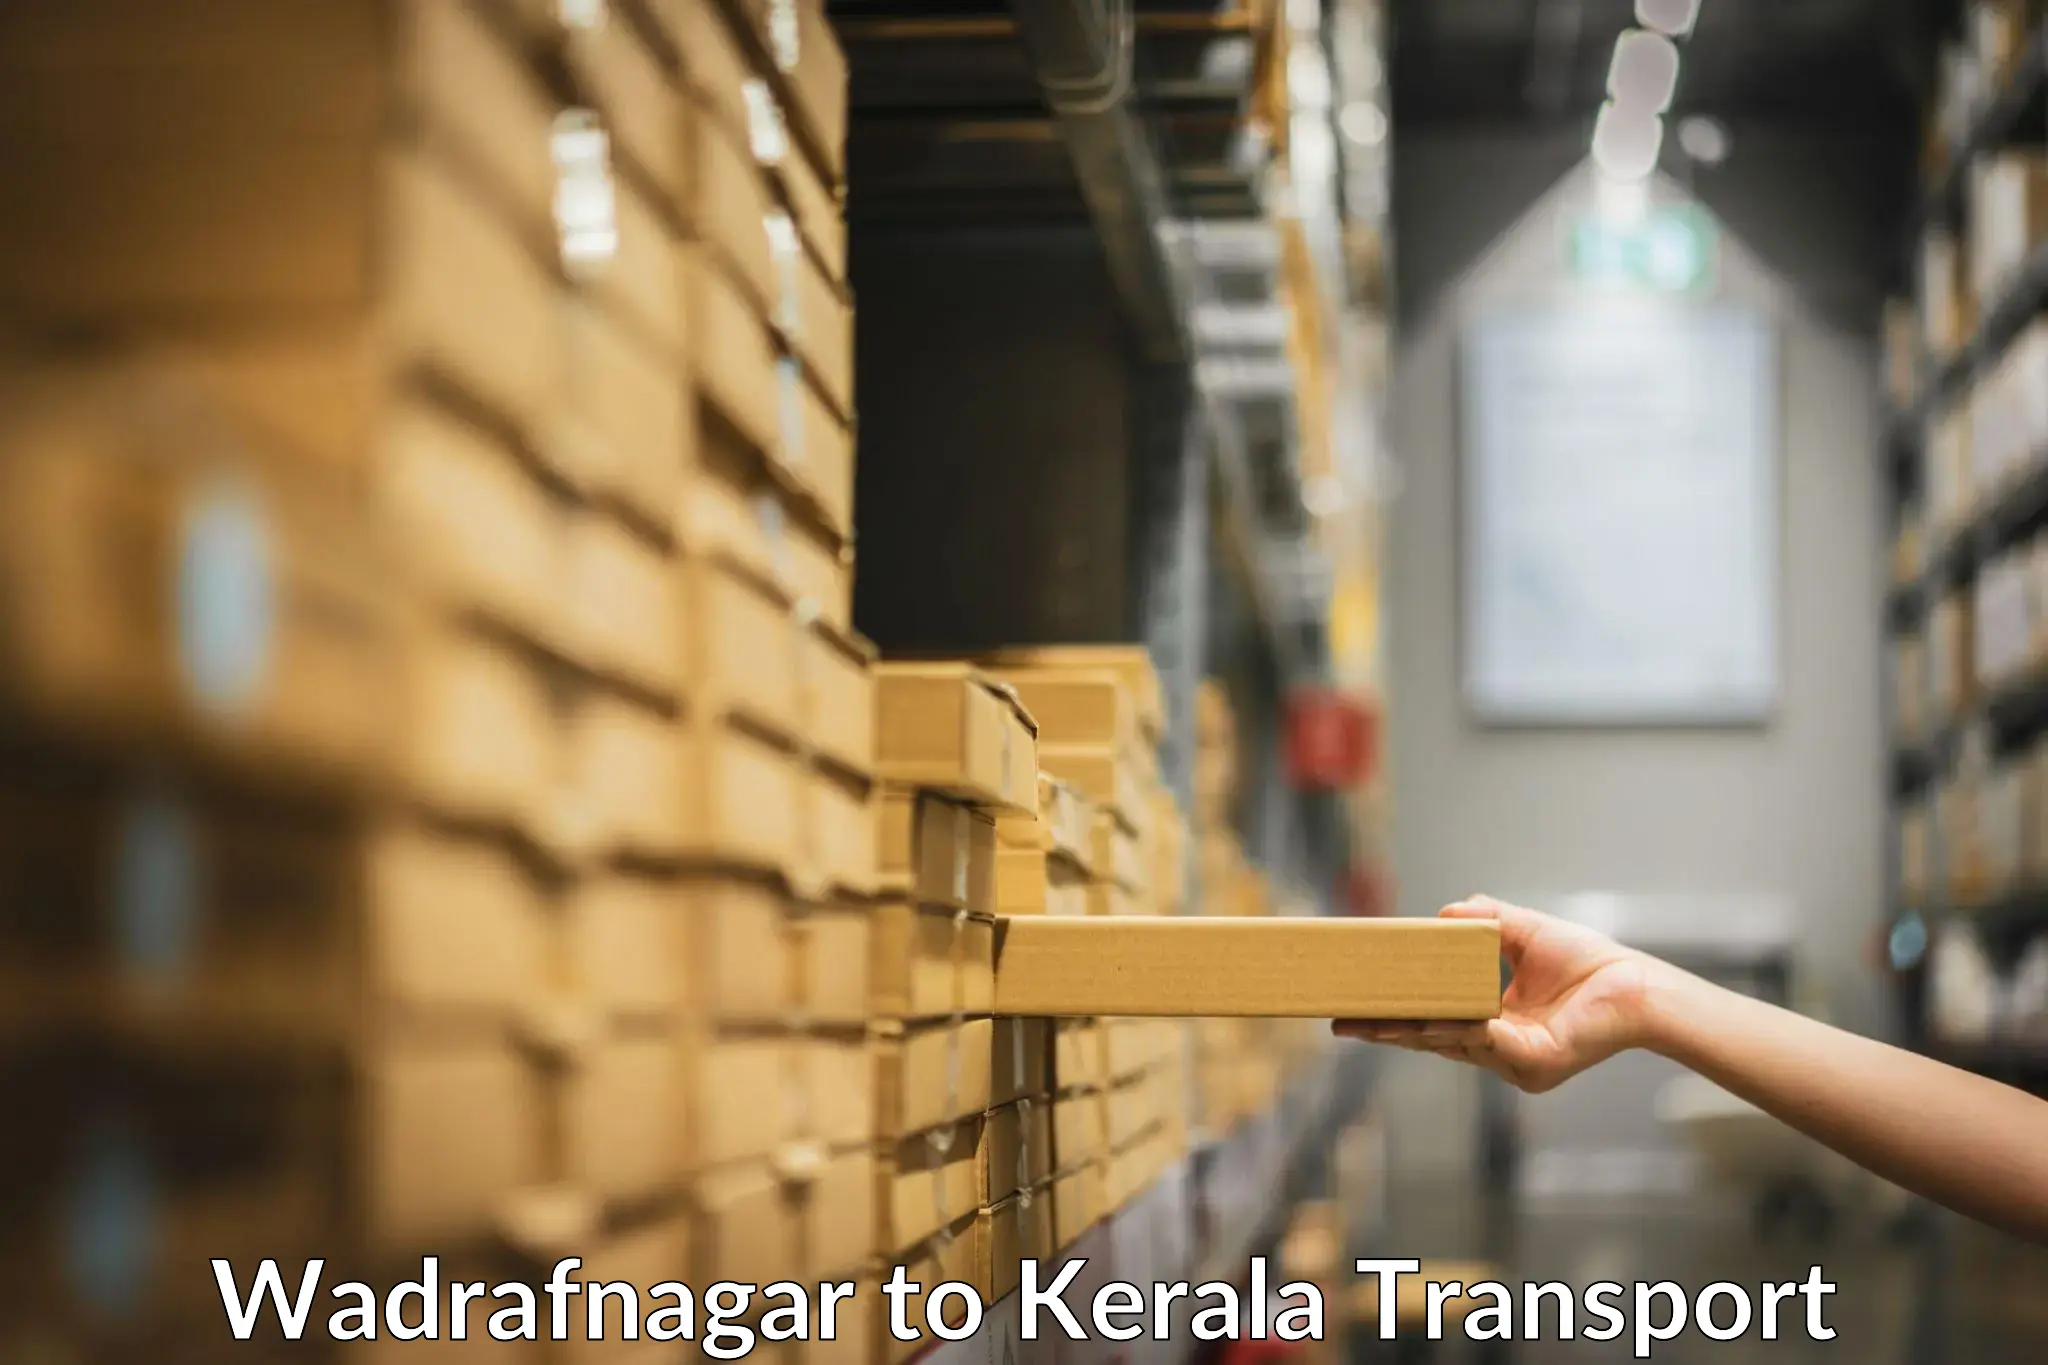 Goods delivery service Wadrafnagar to Kerala